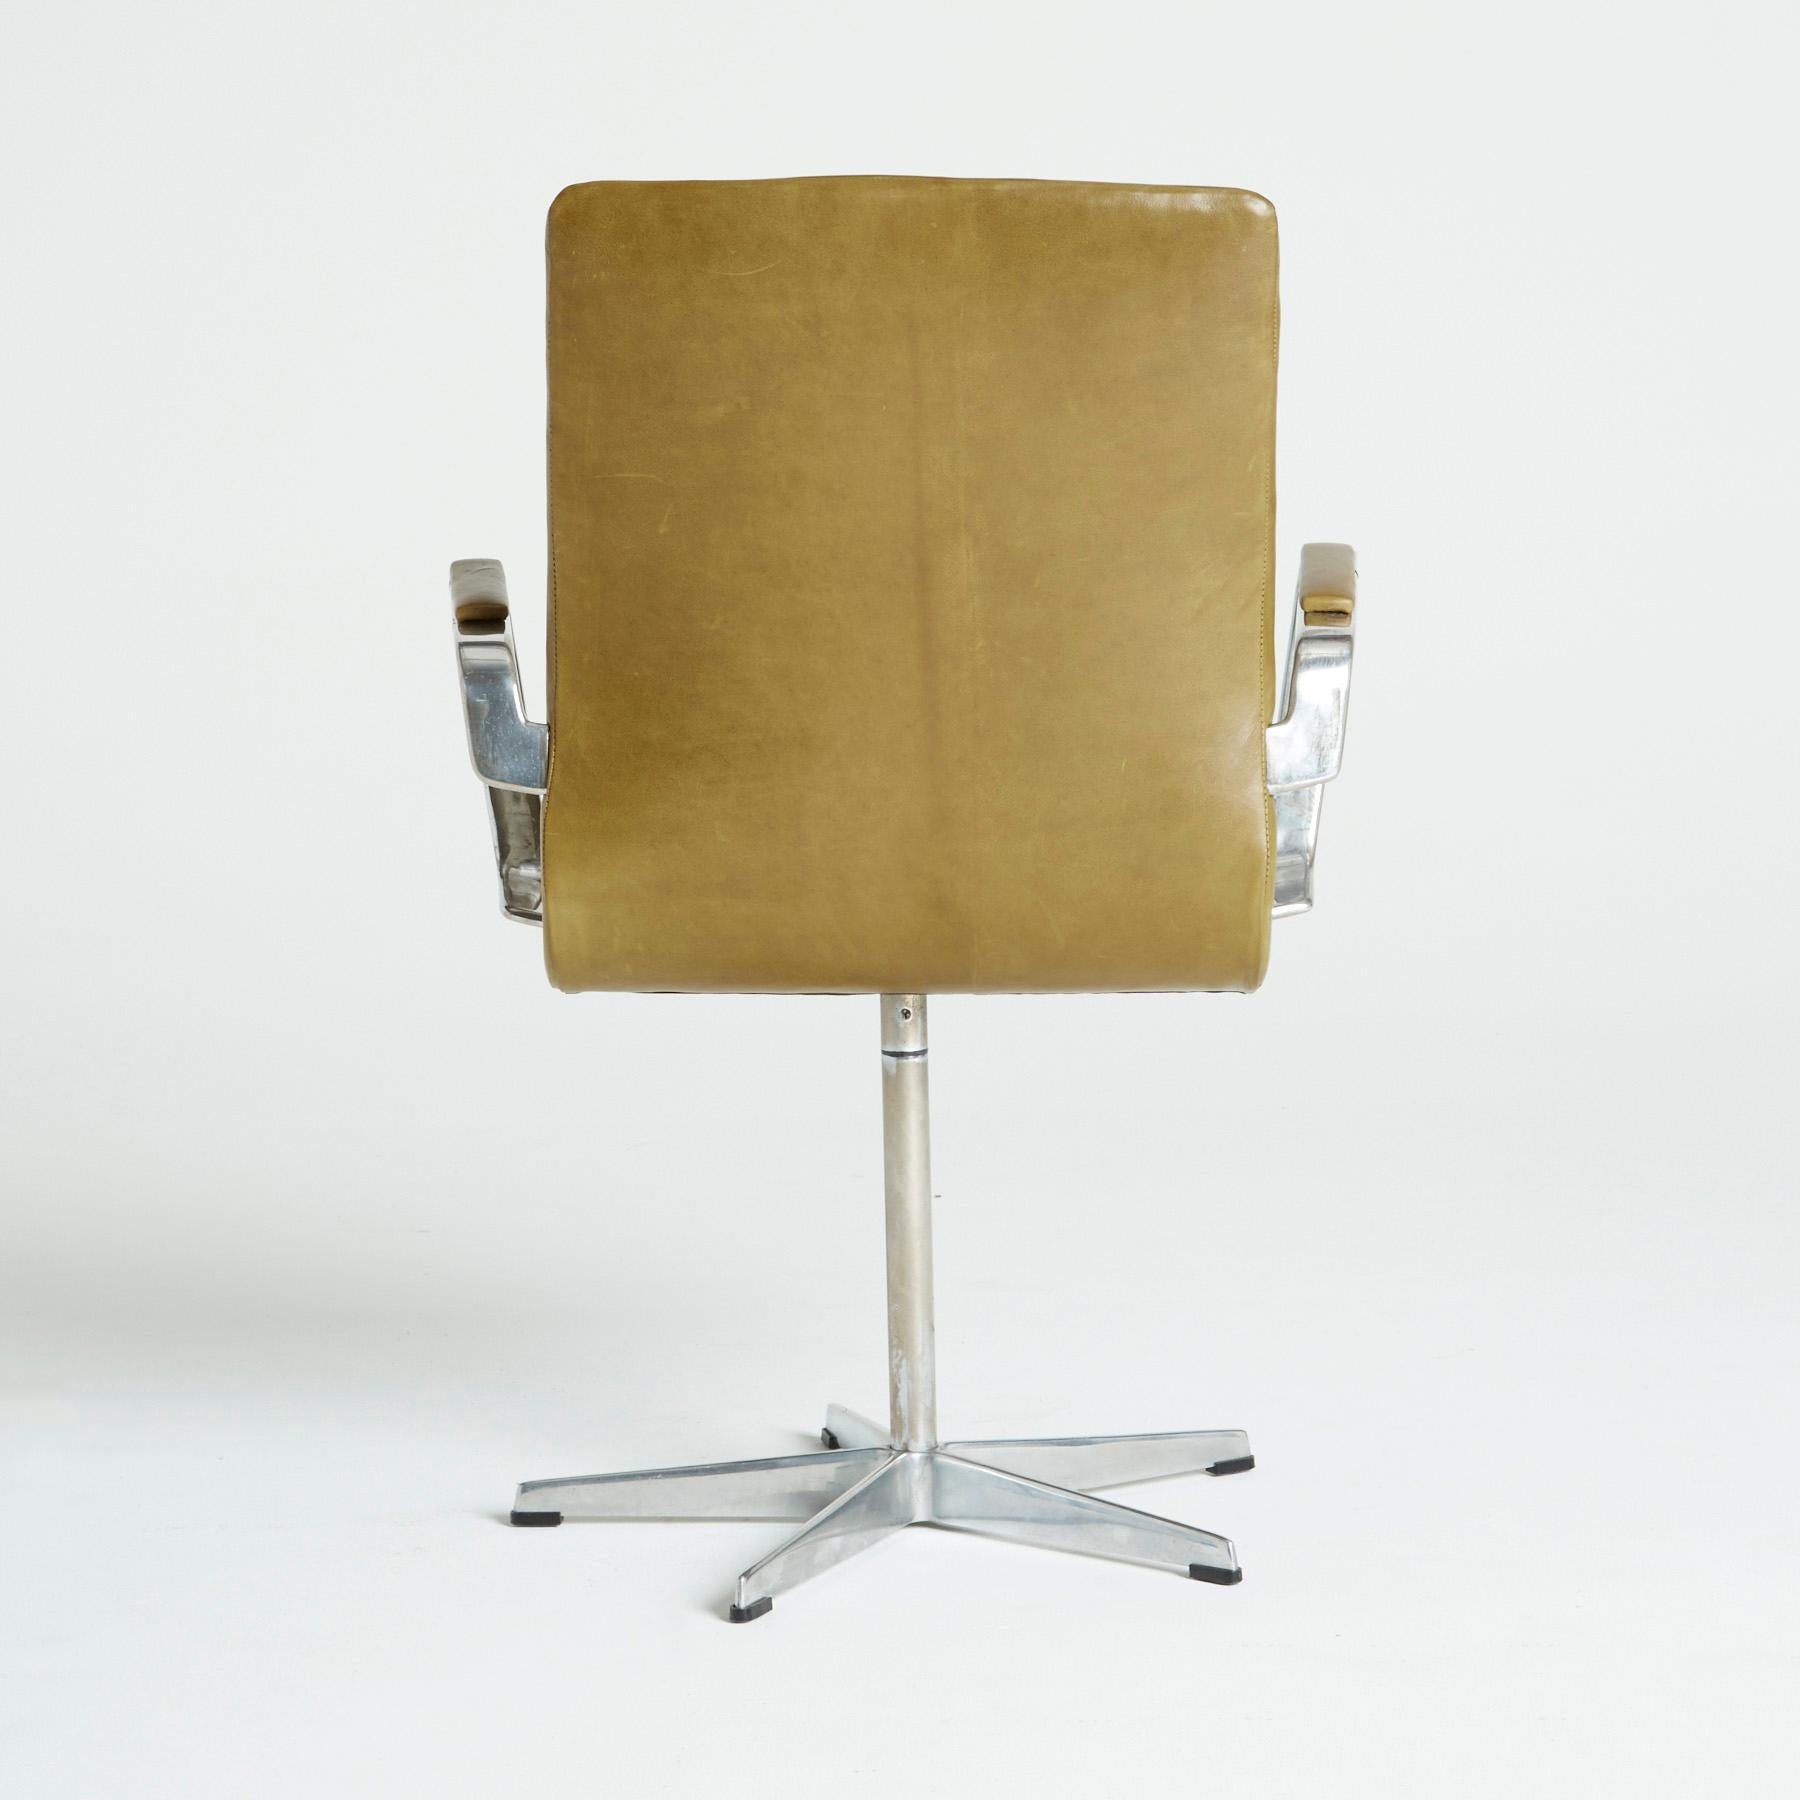 Danish Leather 'Oxford' Swivel Chair by Arne Jacobsen for Fritz Hansen, 1973, Signed